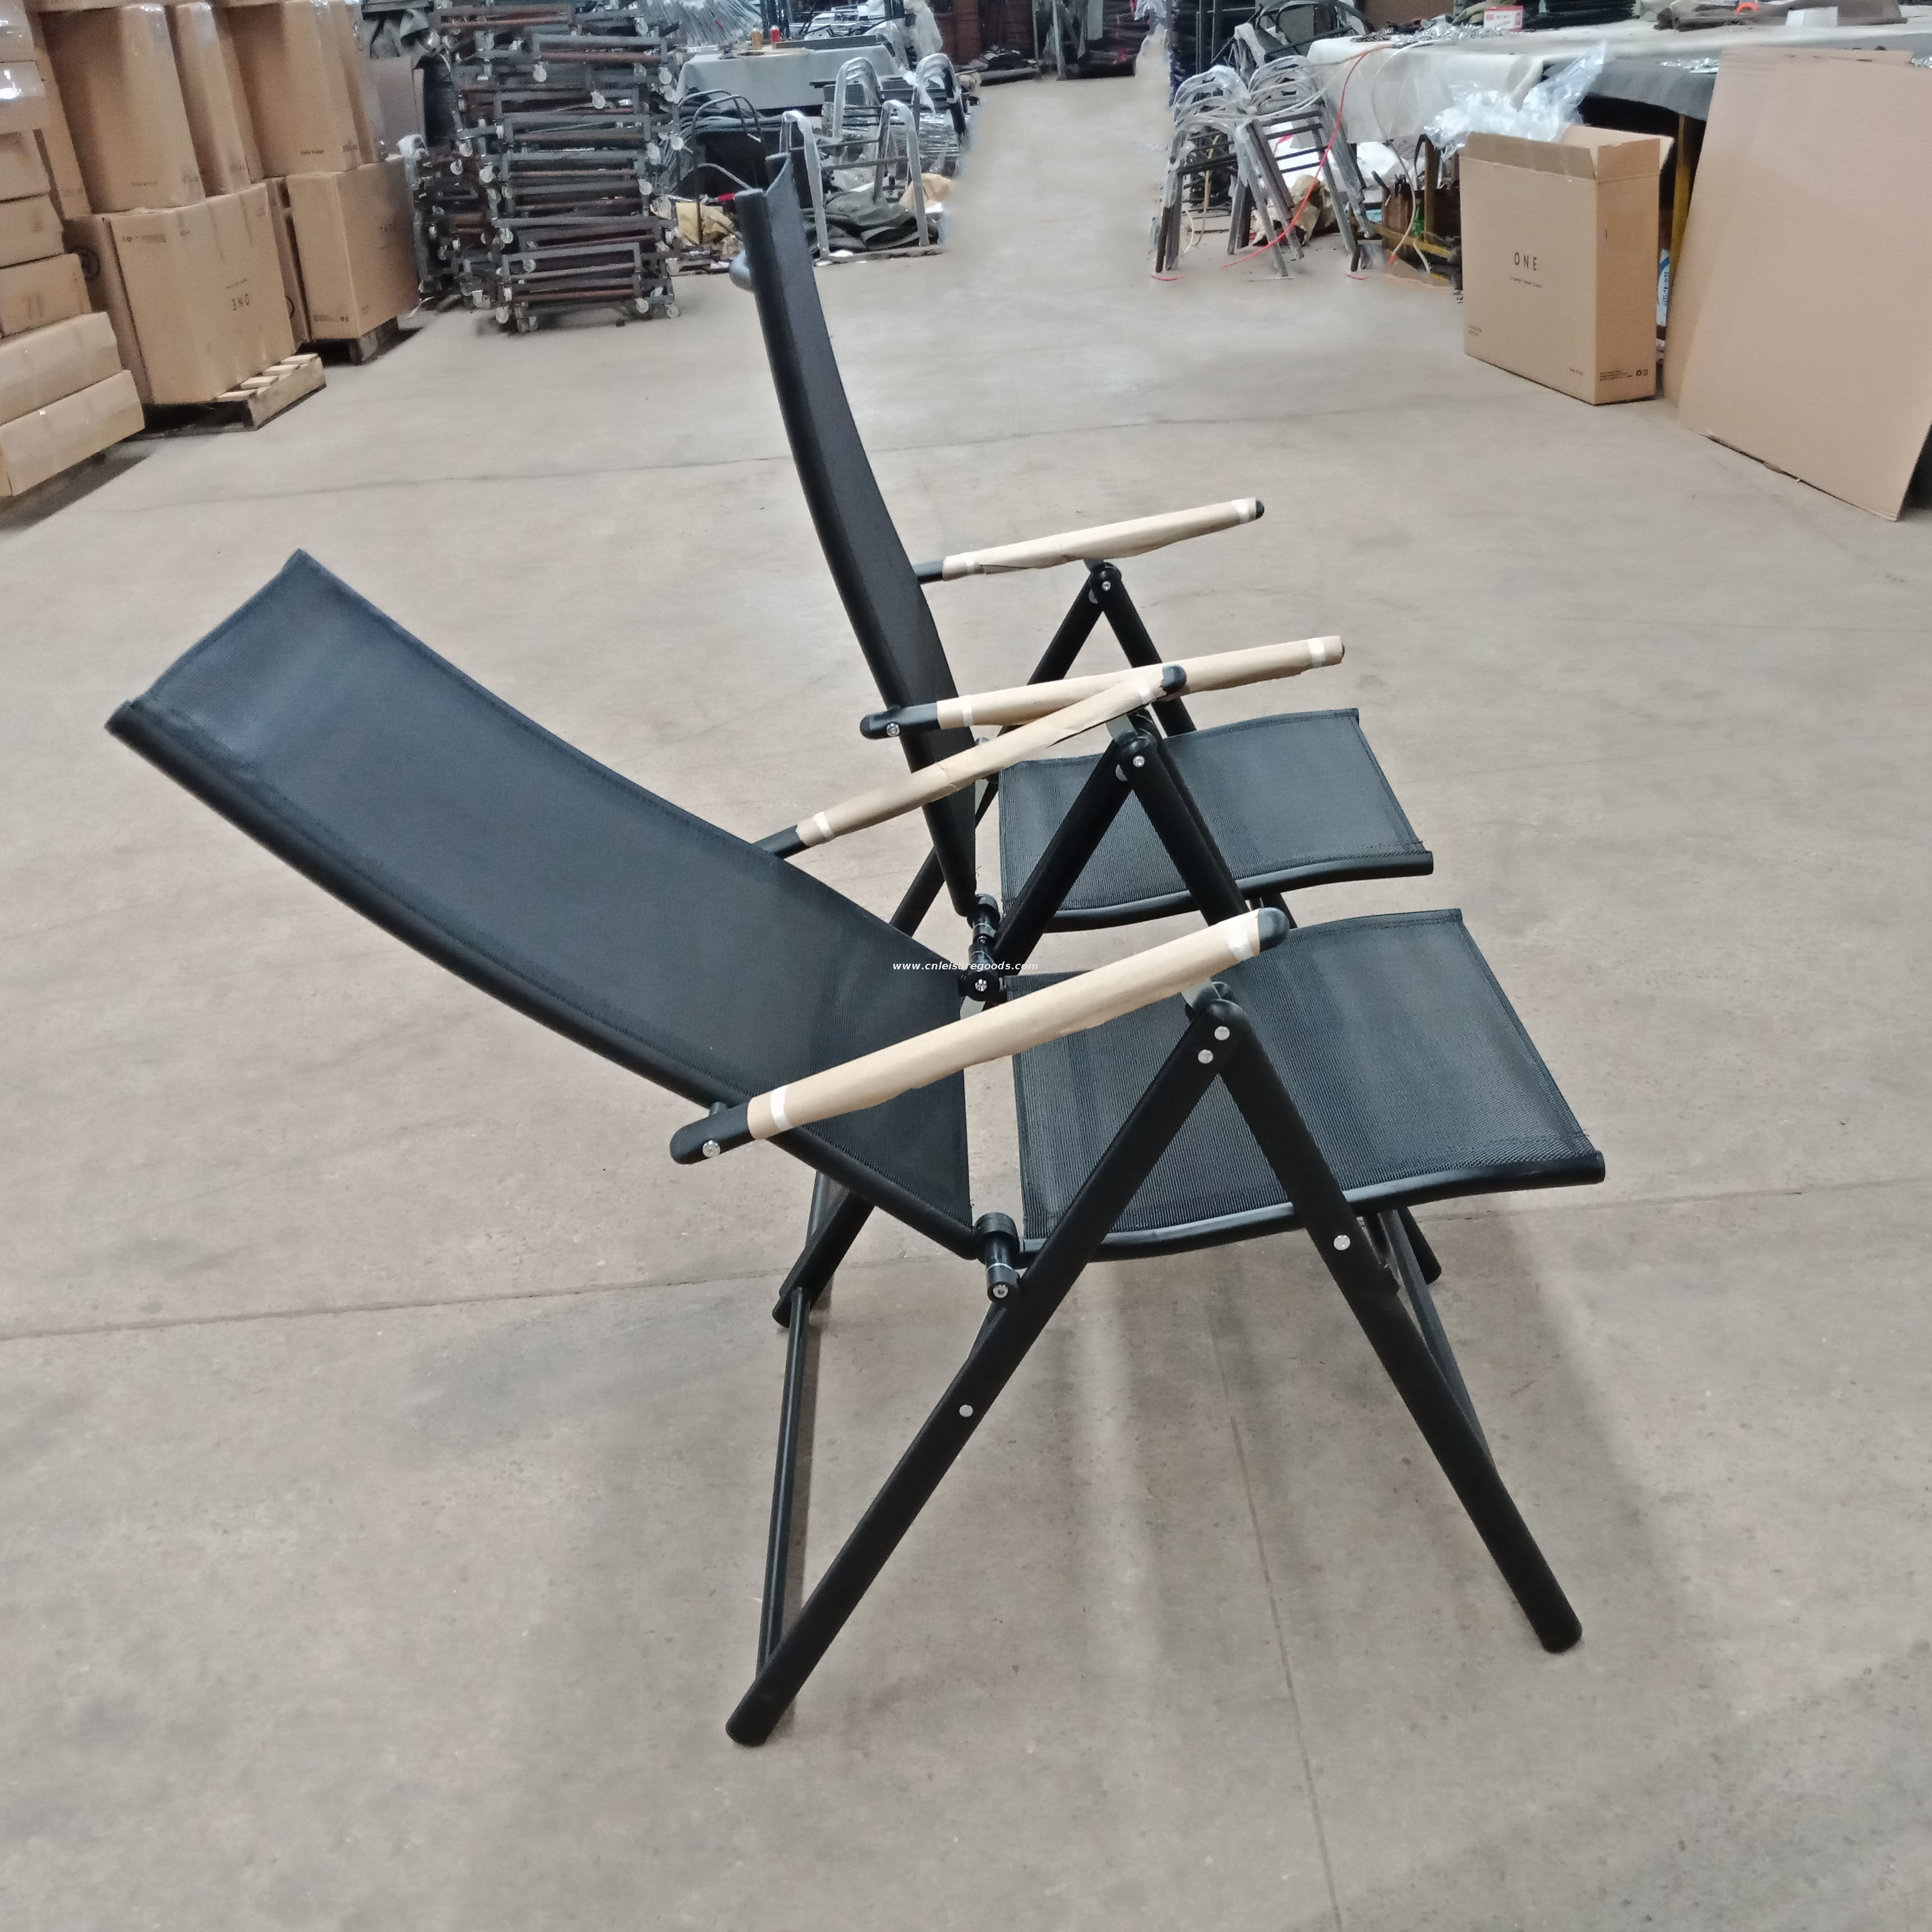 Uplion Fashion Practical Steel Frame 7 Seven Position Outdoor Garden Folding Chair